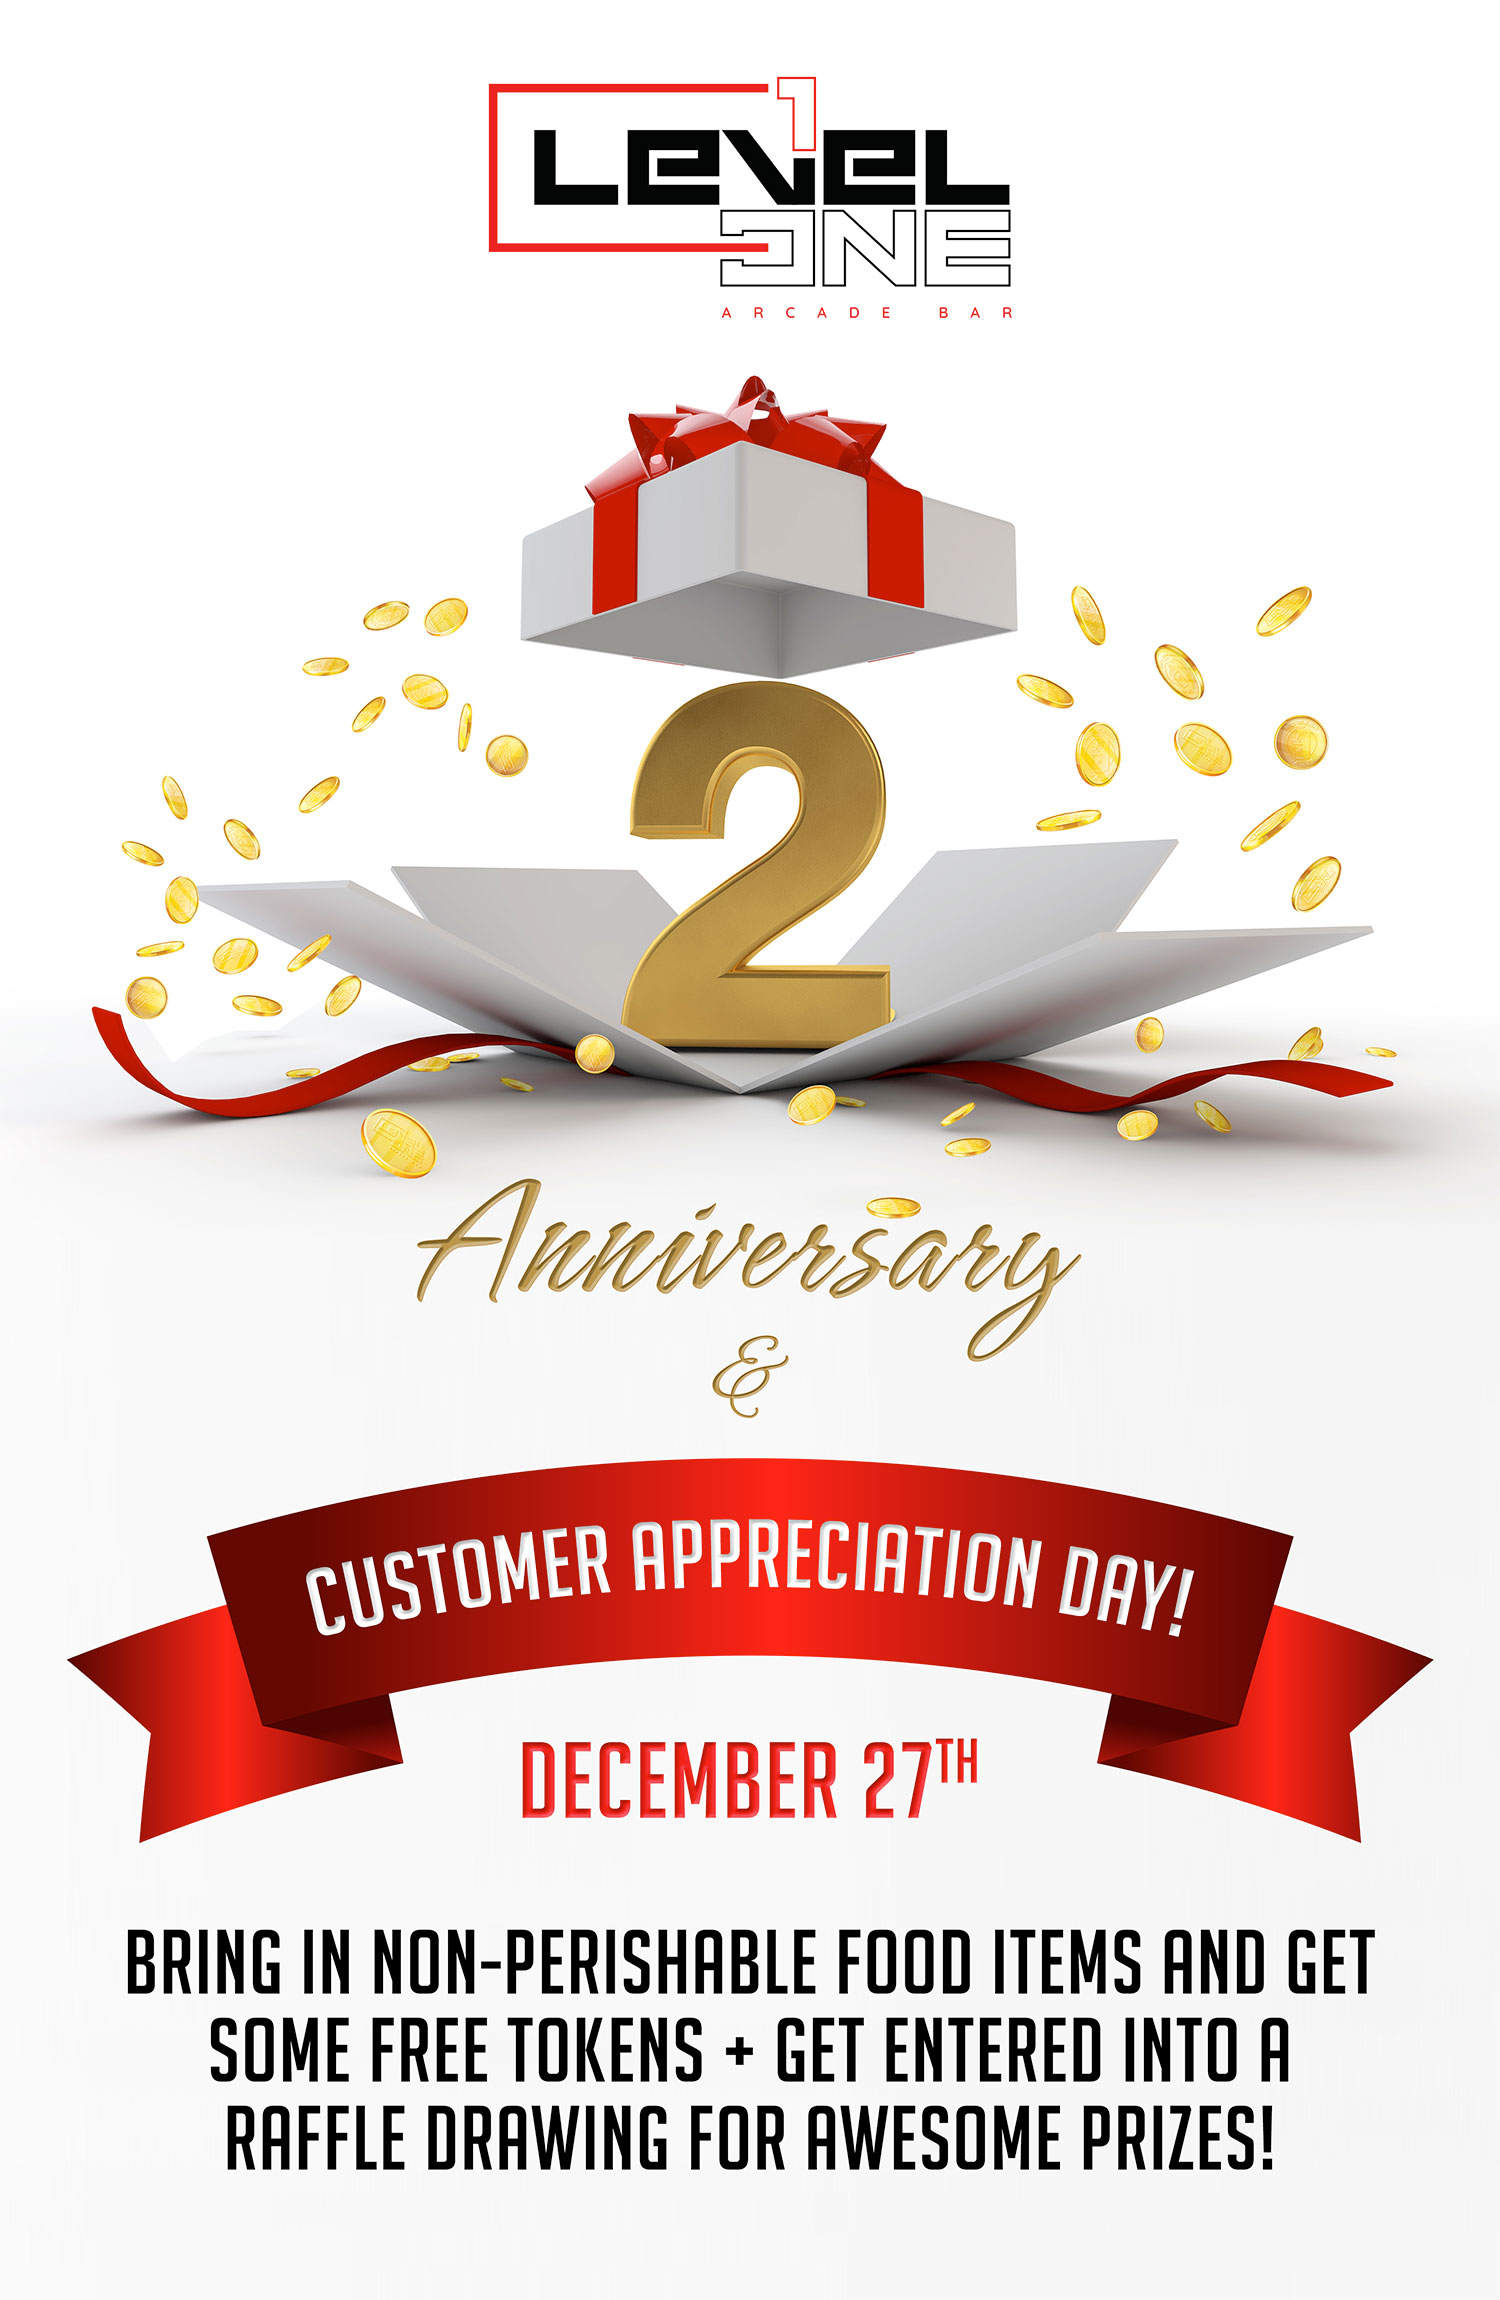 2nd Anniversary & Customer Appreciation Day